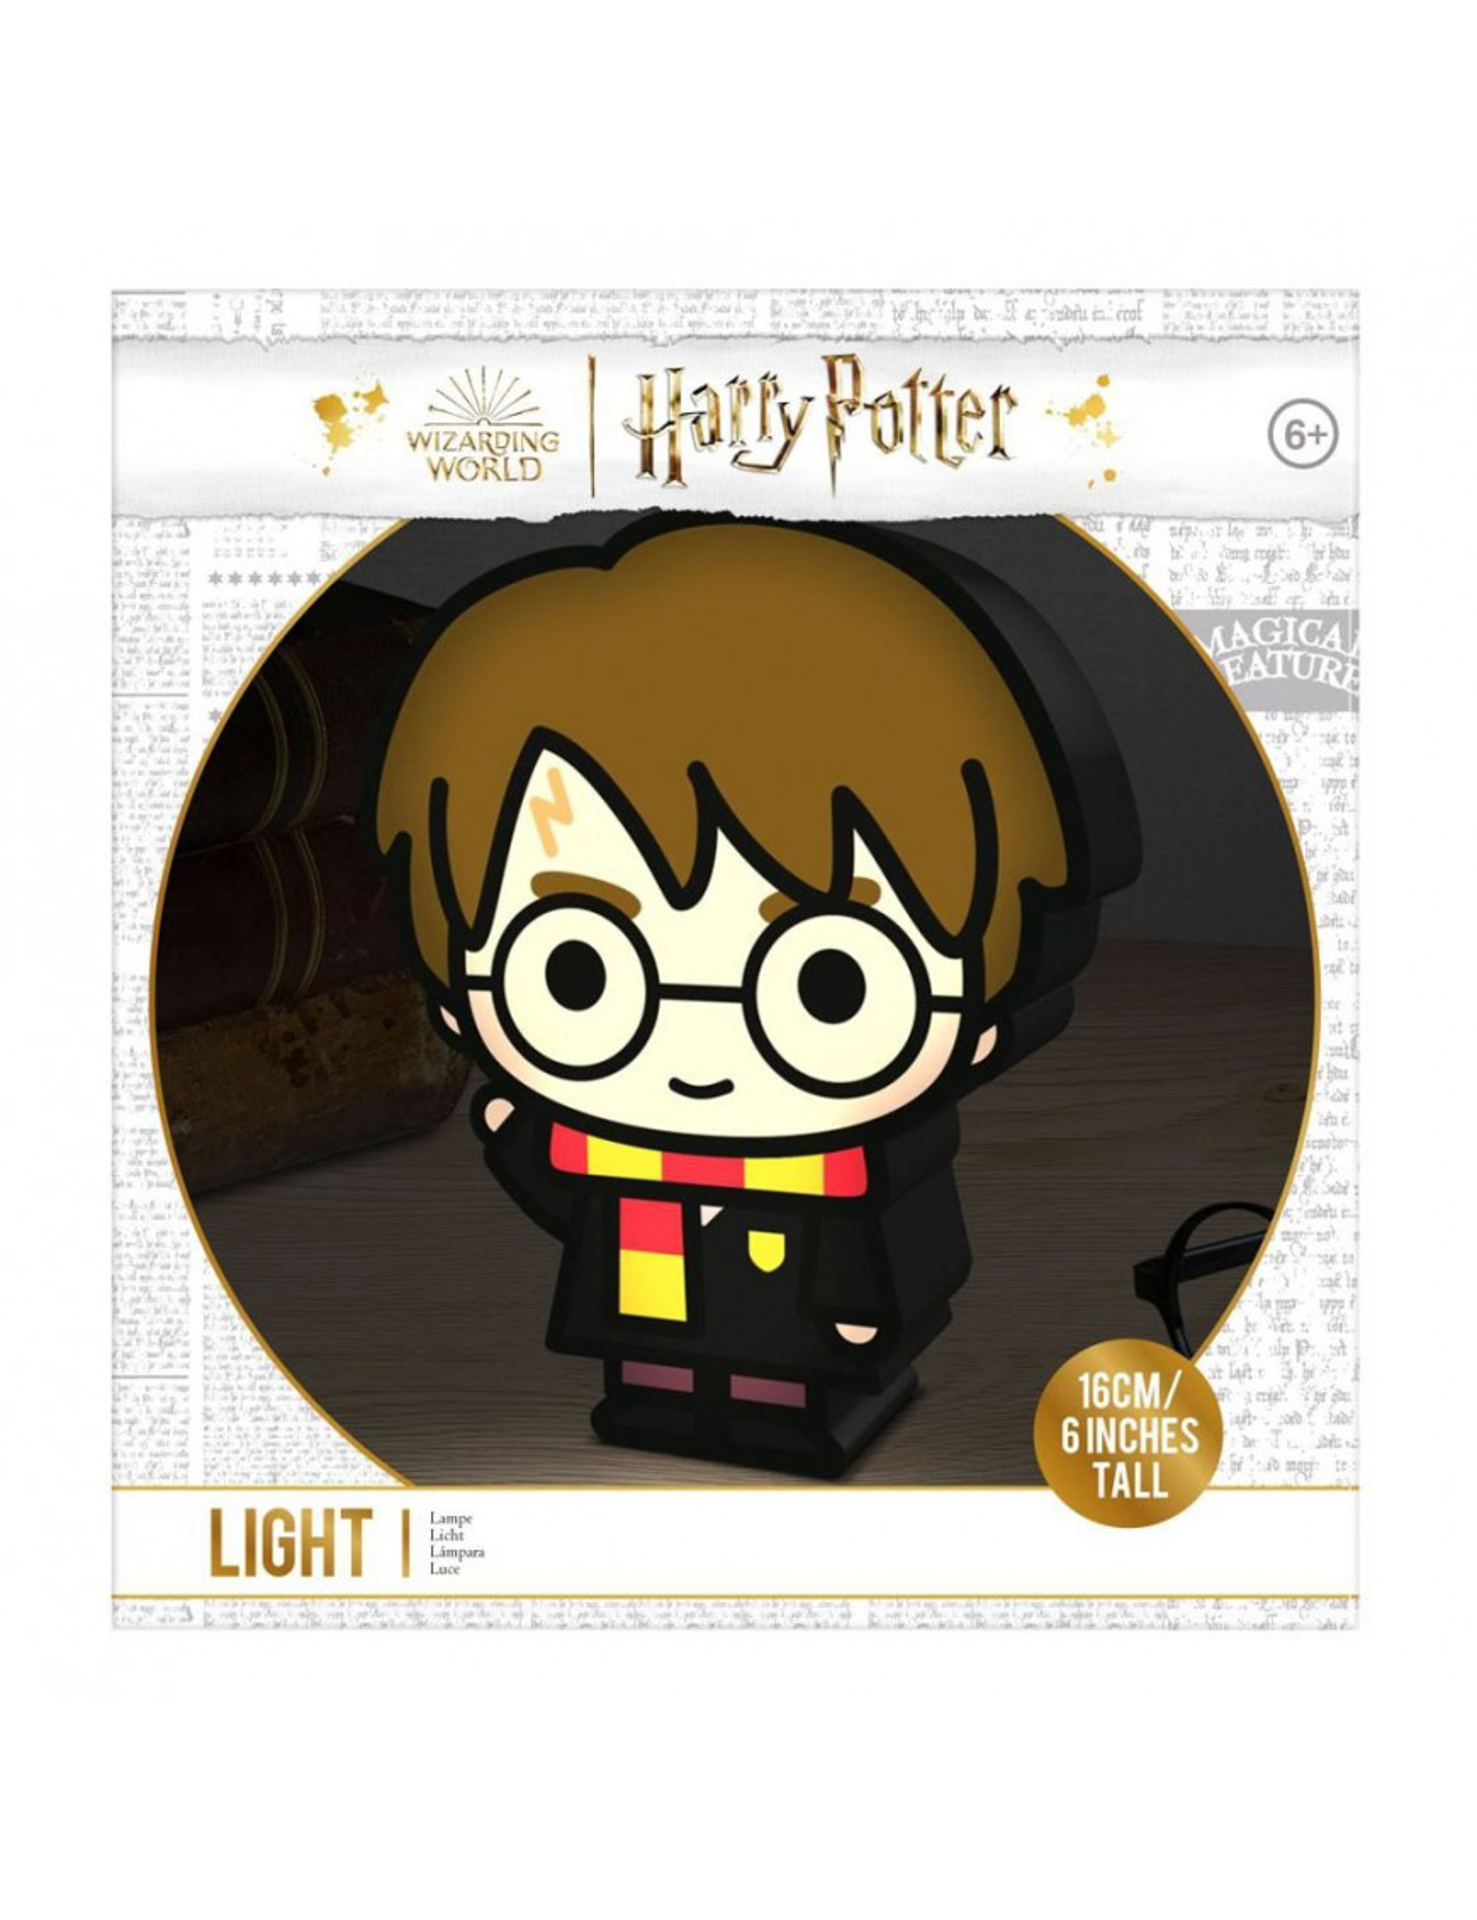 Lampe Hedwige Harry Potter